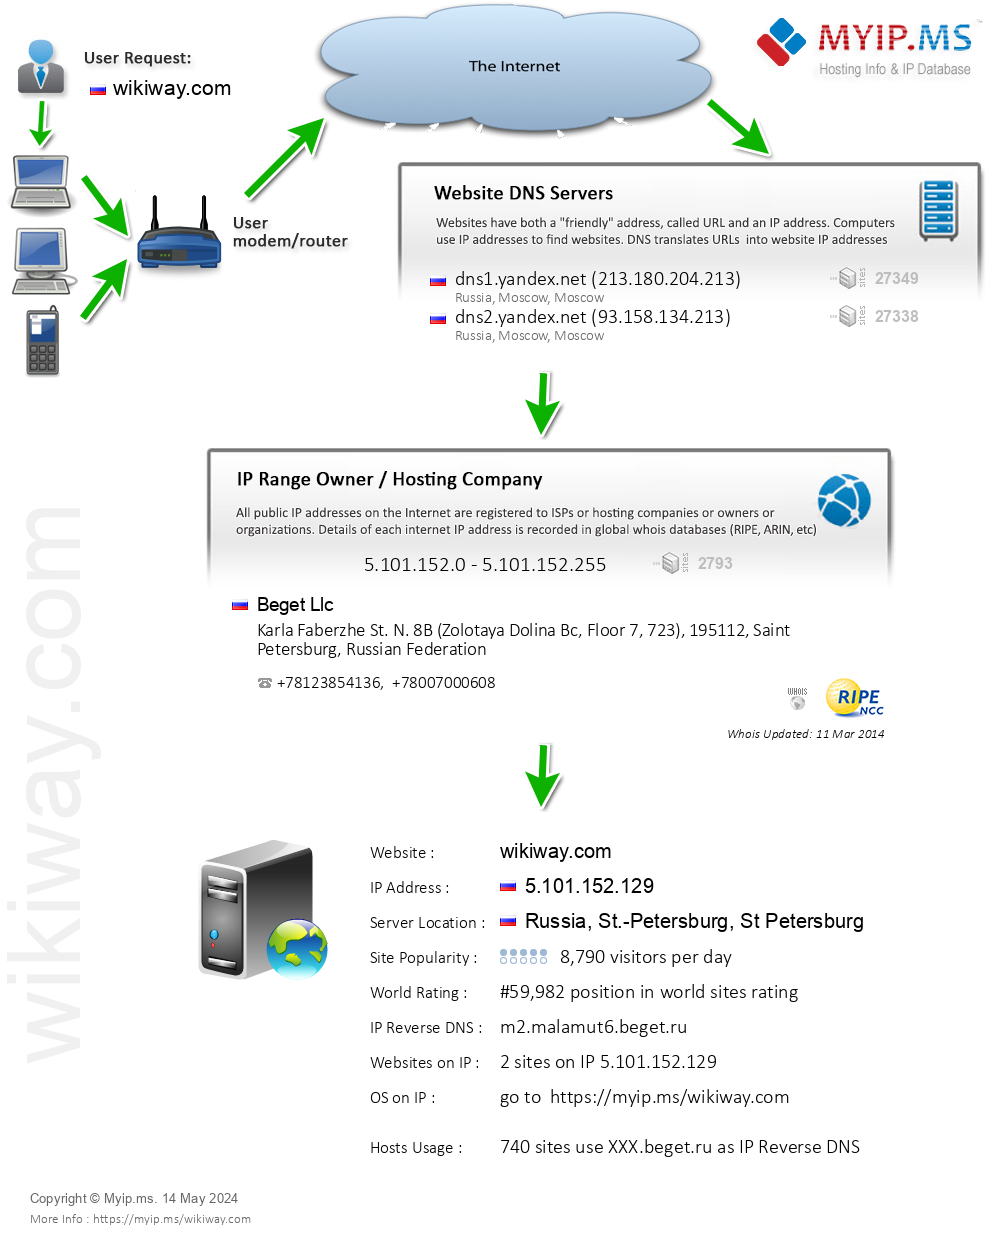 Wikiway.com - Website Hosting Visual IP Diagram